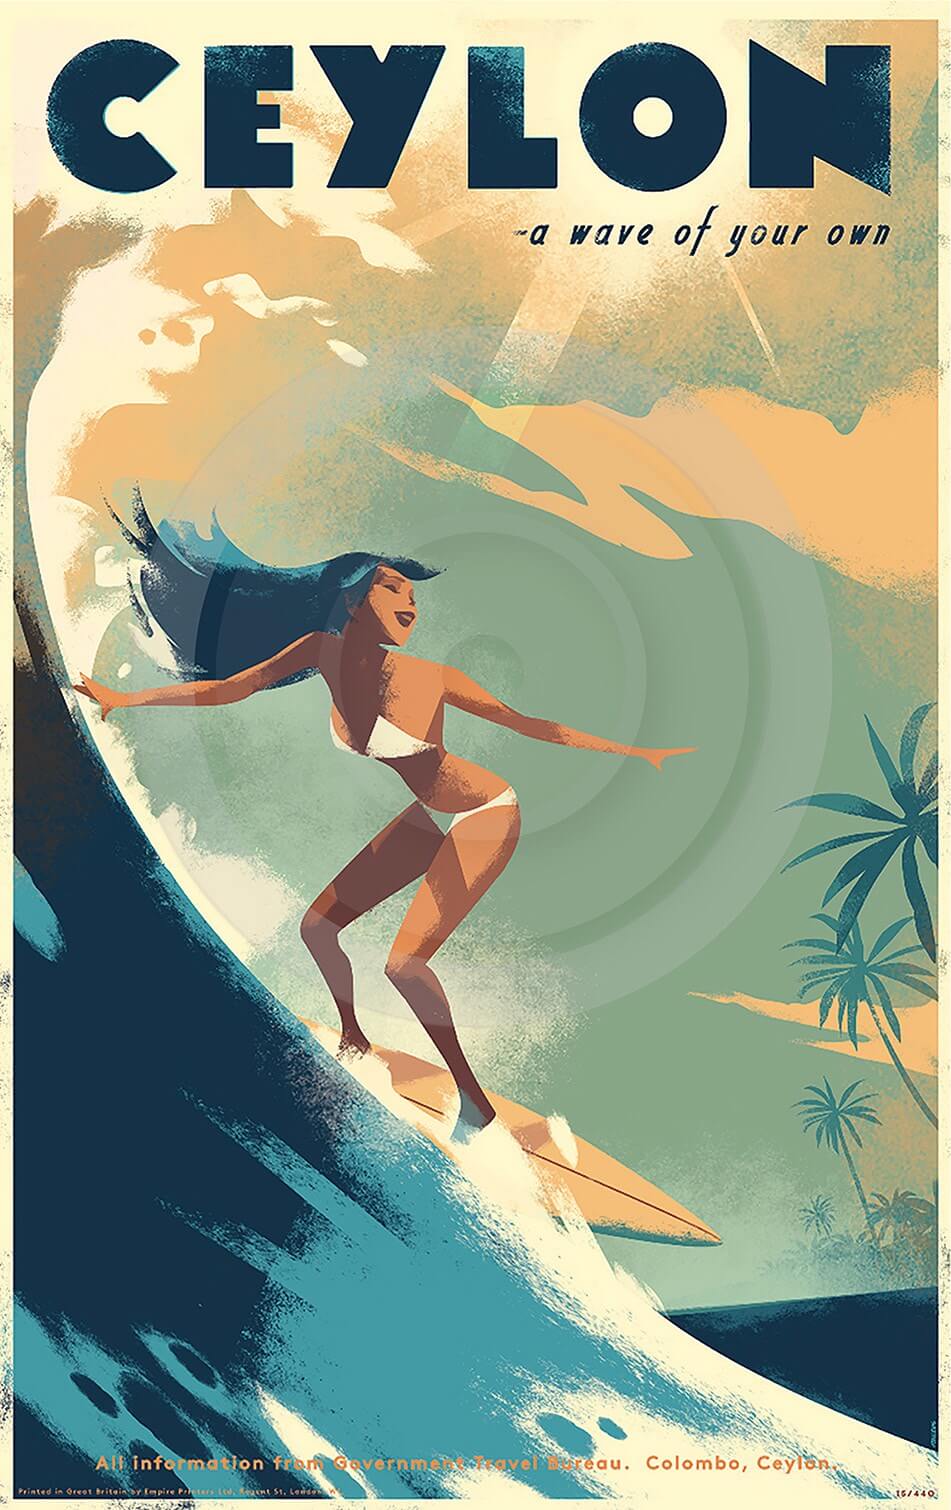 Vintage surf poster for Colombo, Ceylon by illustrator, Mads Berg